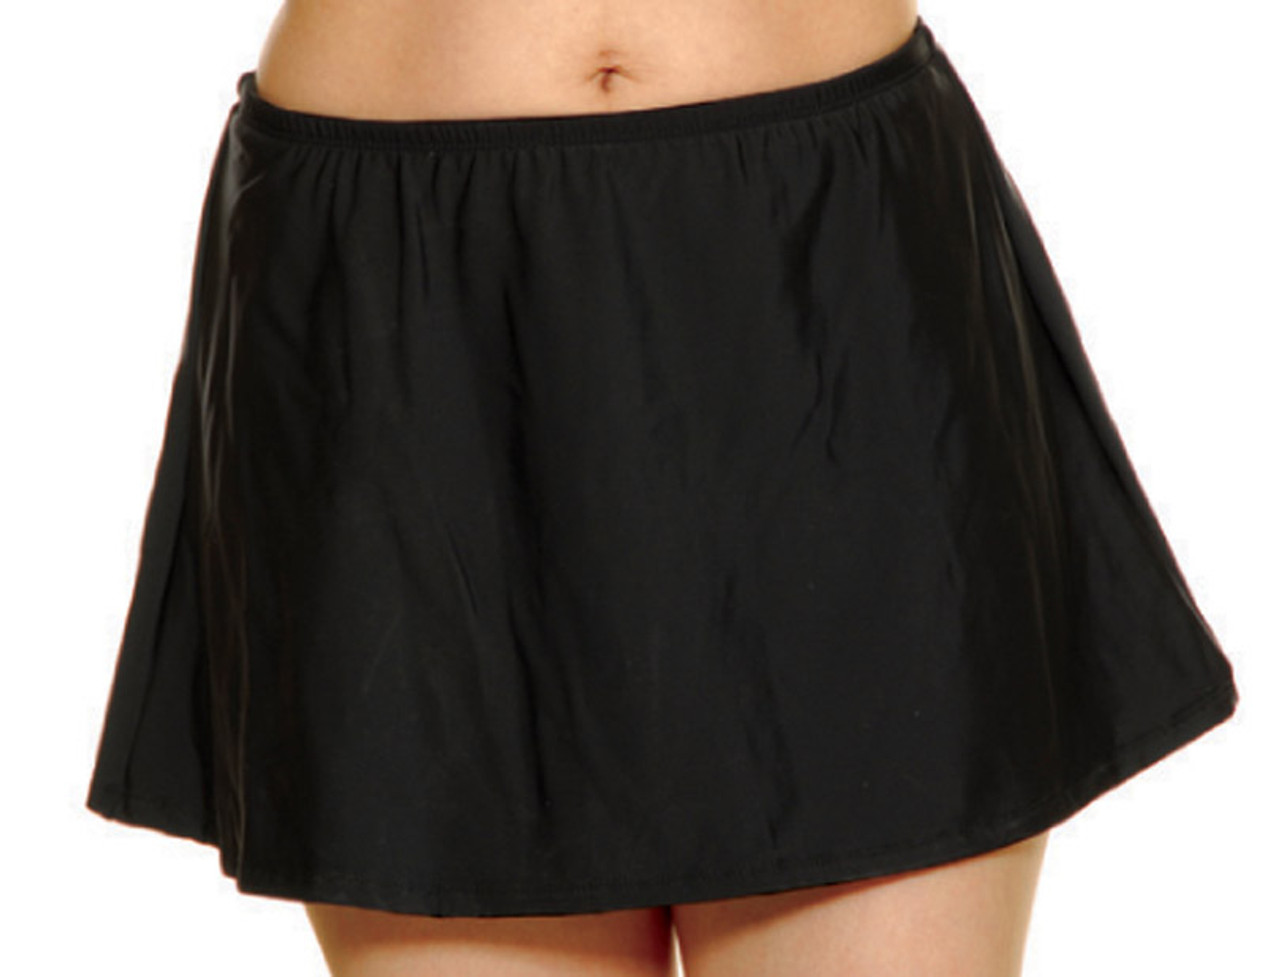 Tummy Control Swim Bottoms - Miraclesuit Skirt